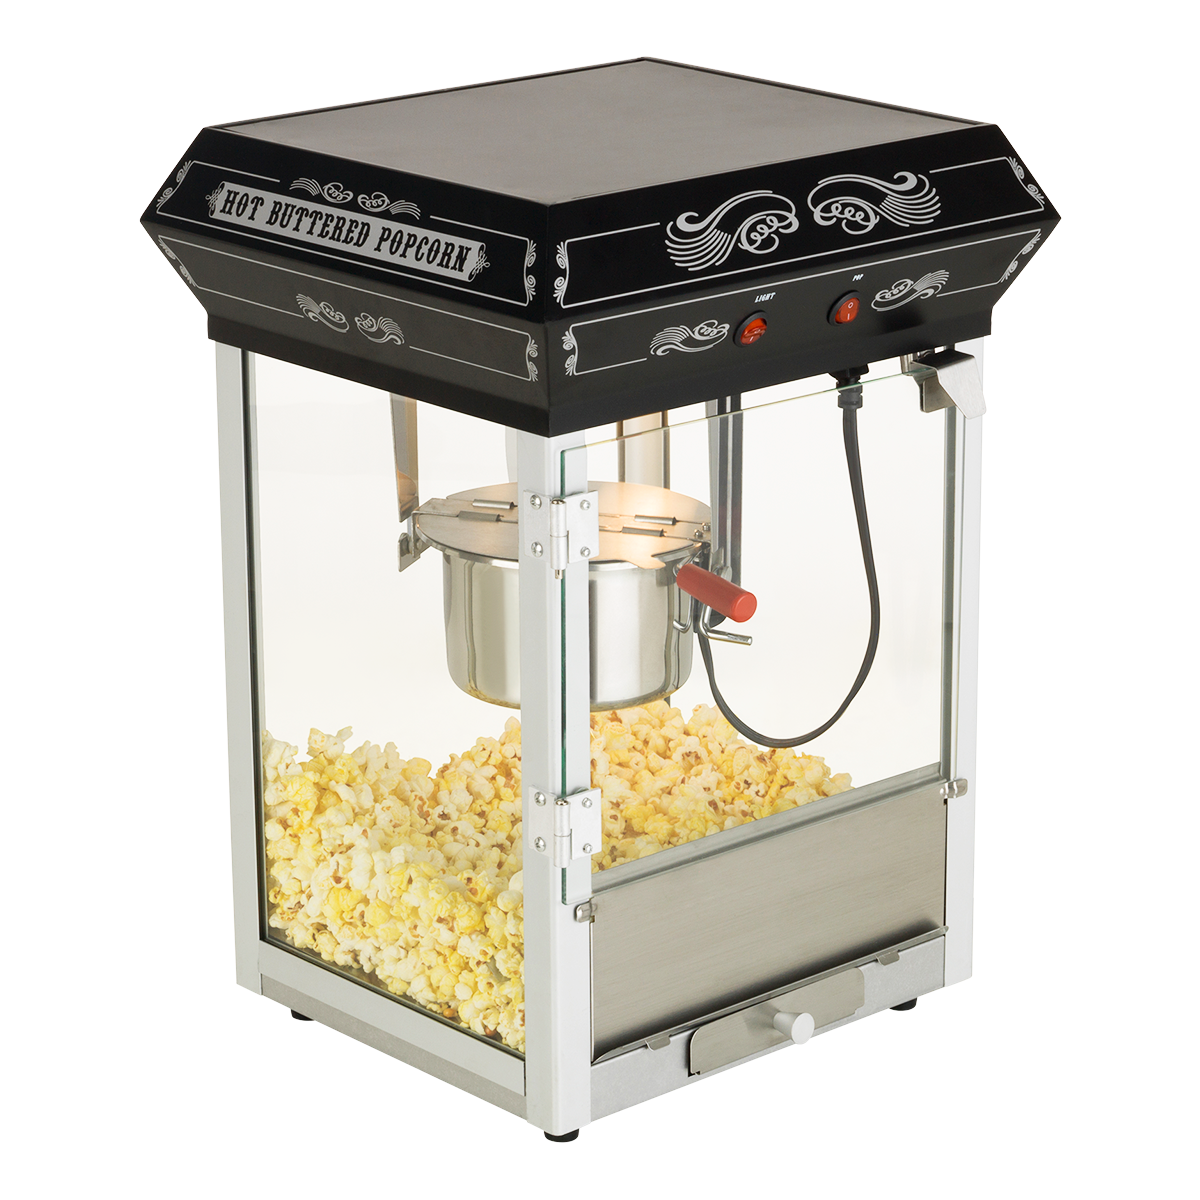 Funtime FT421CB Carnival Style 4oz Hot Oil Popcorn Machine, Black